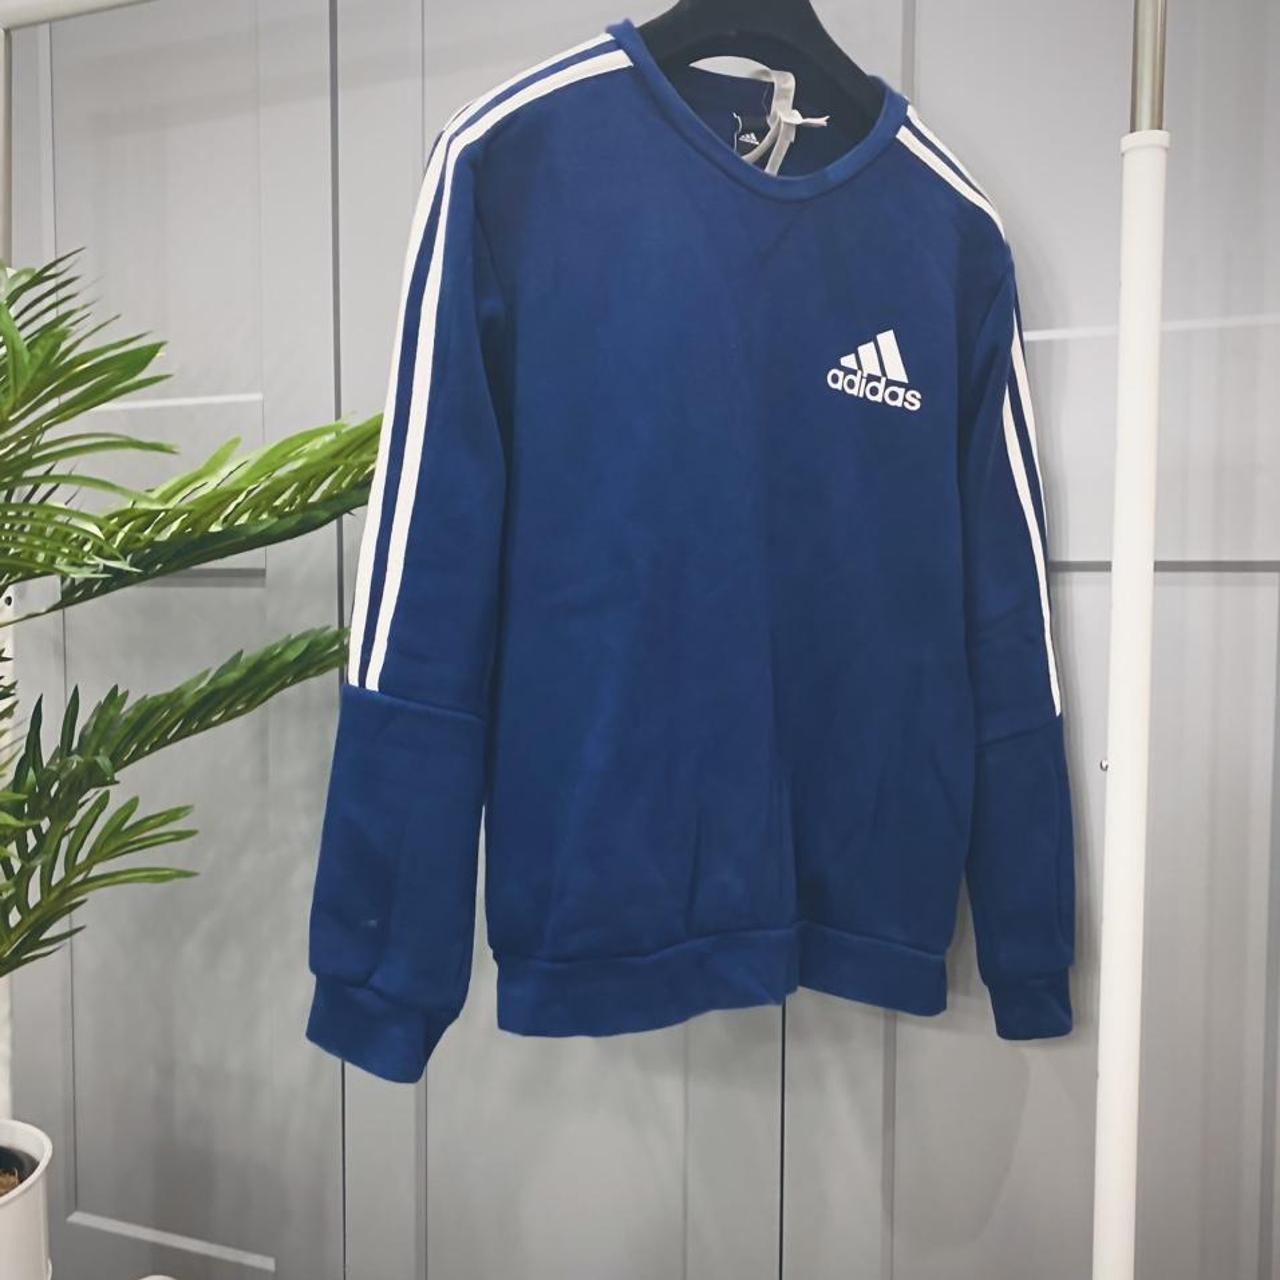 Adidas Men's Shirt - Blue - M